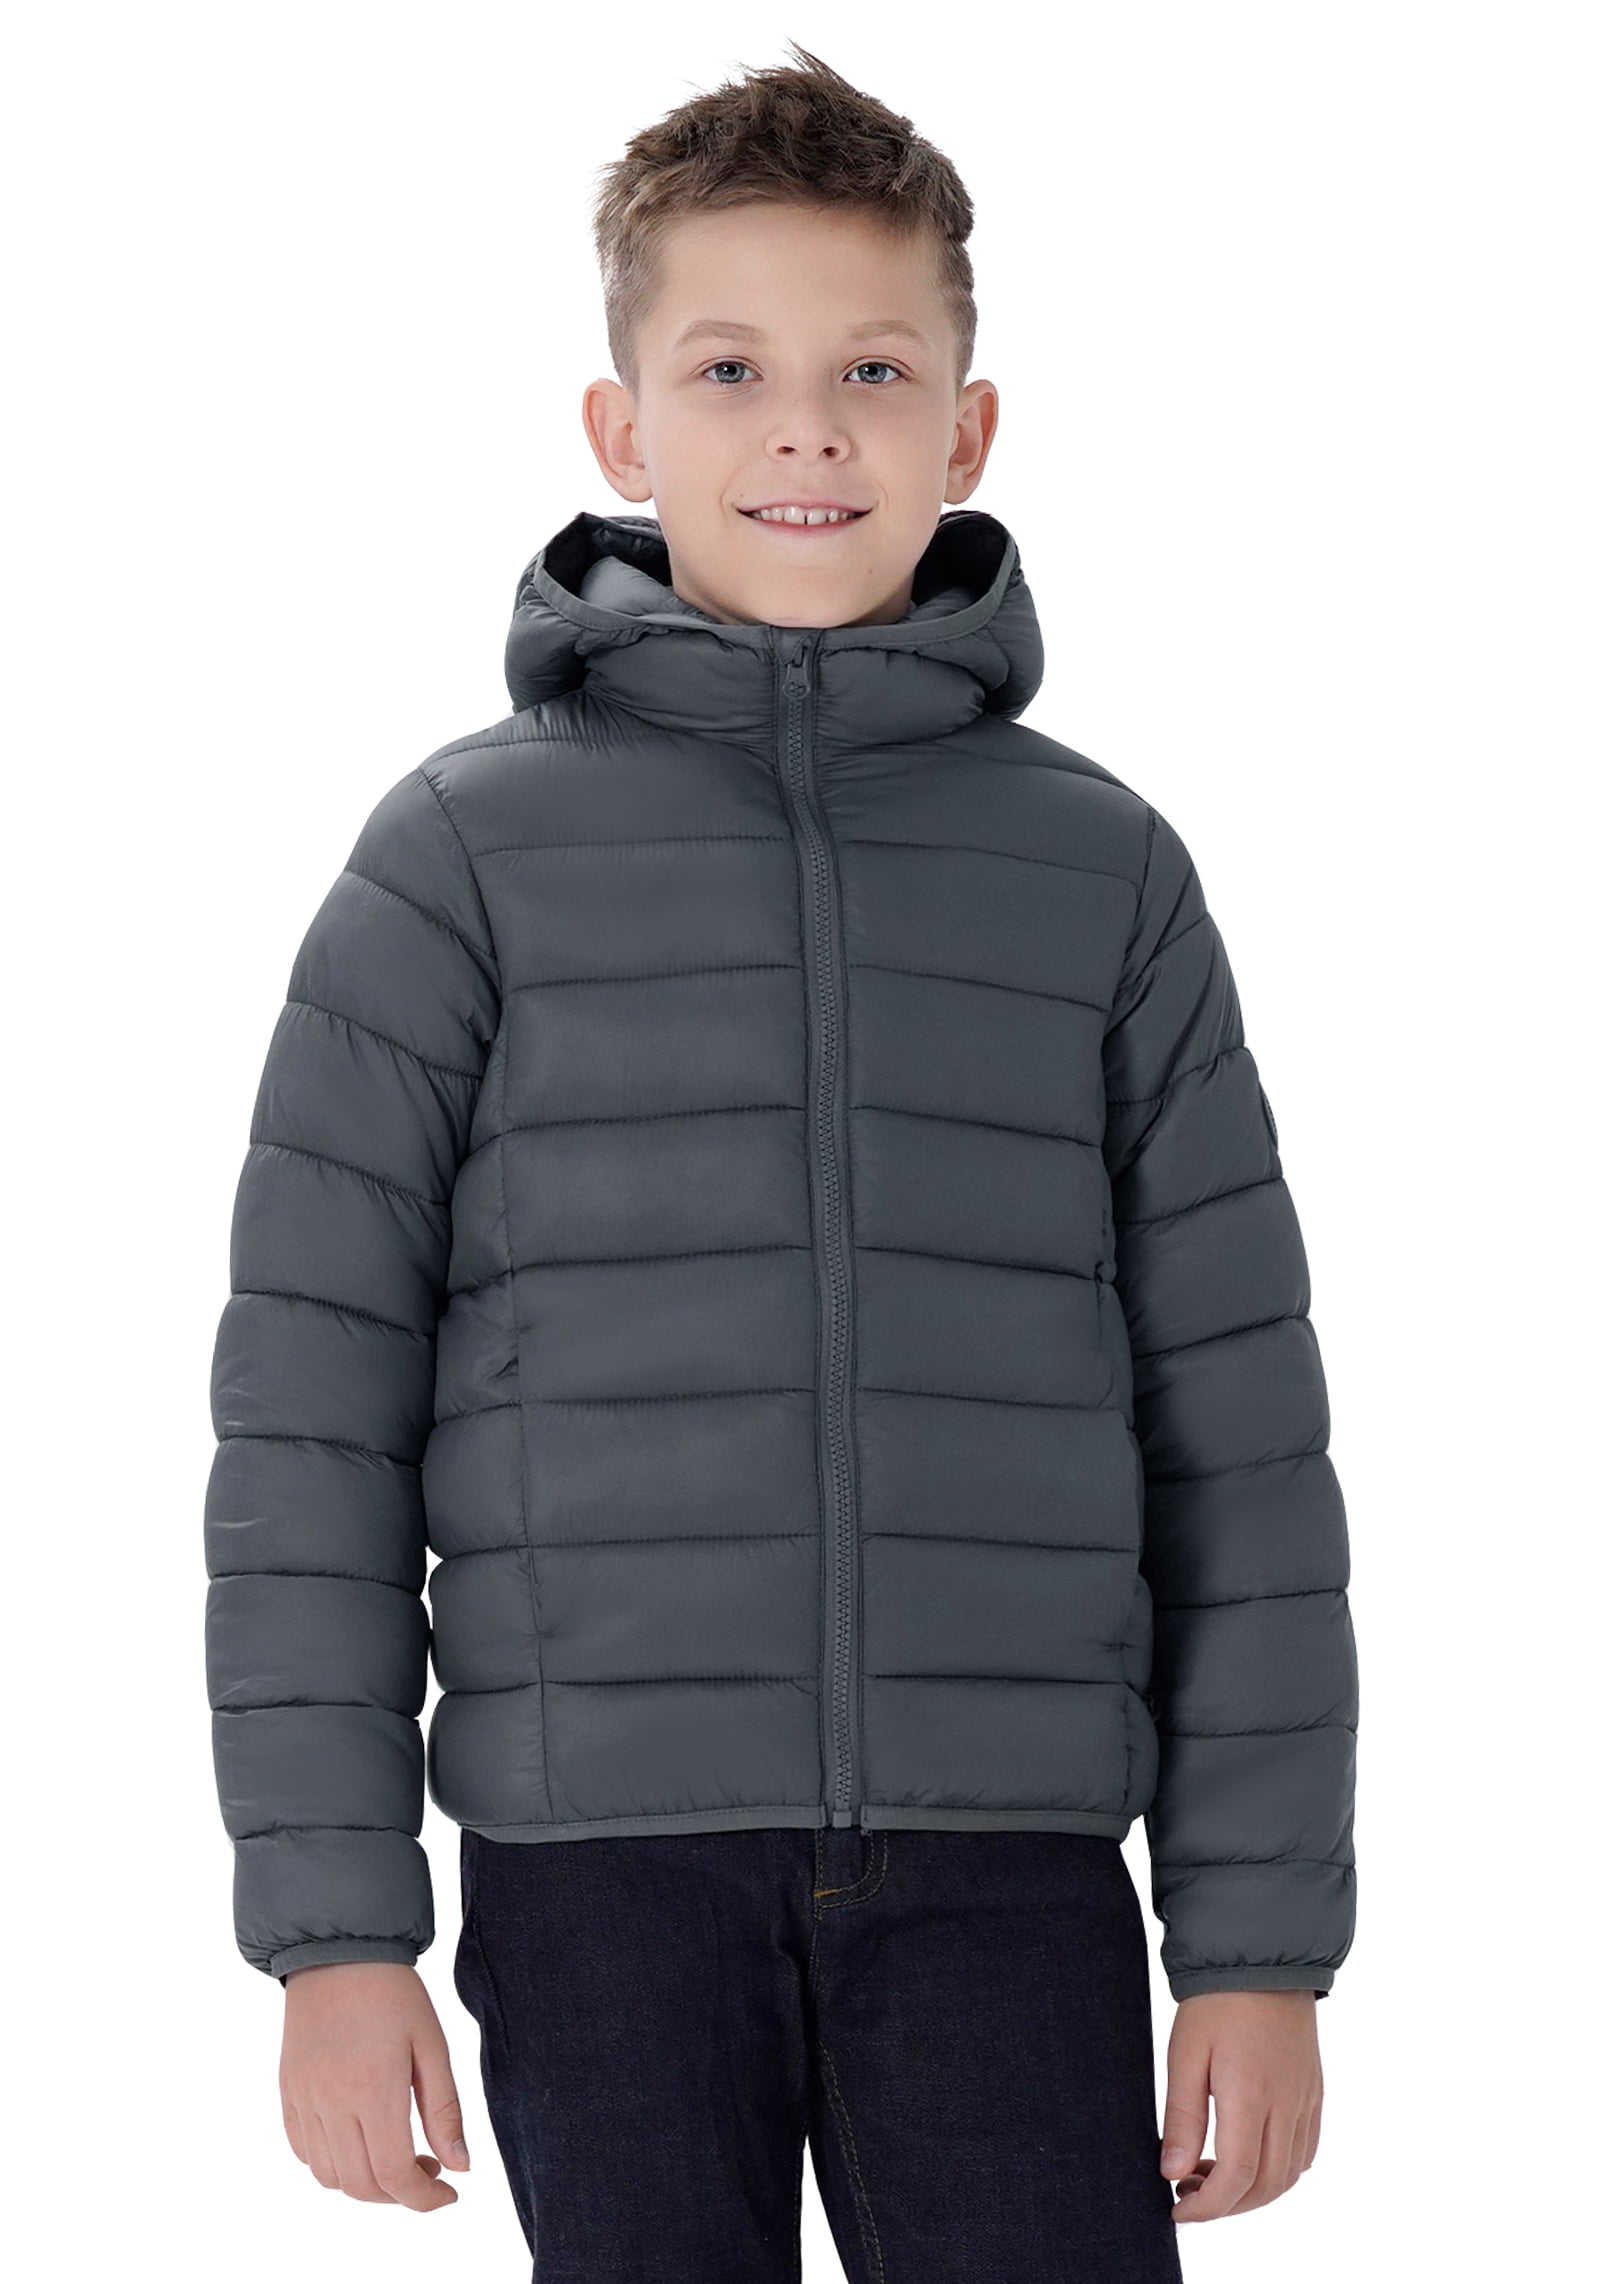 SOLOCOTE Boys Winter Coats Kids Winter Jacket Warm Thick Heavyweight Tough Long Windproof Outwear with Hood 